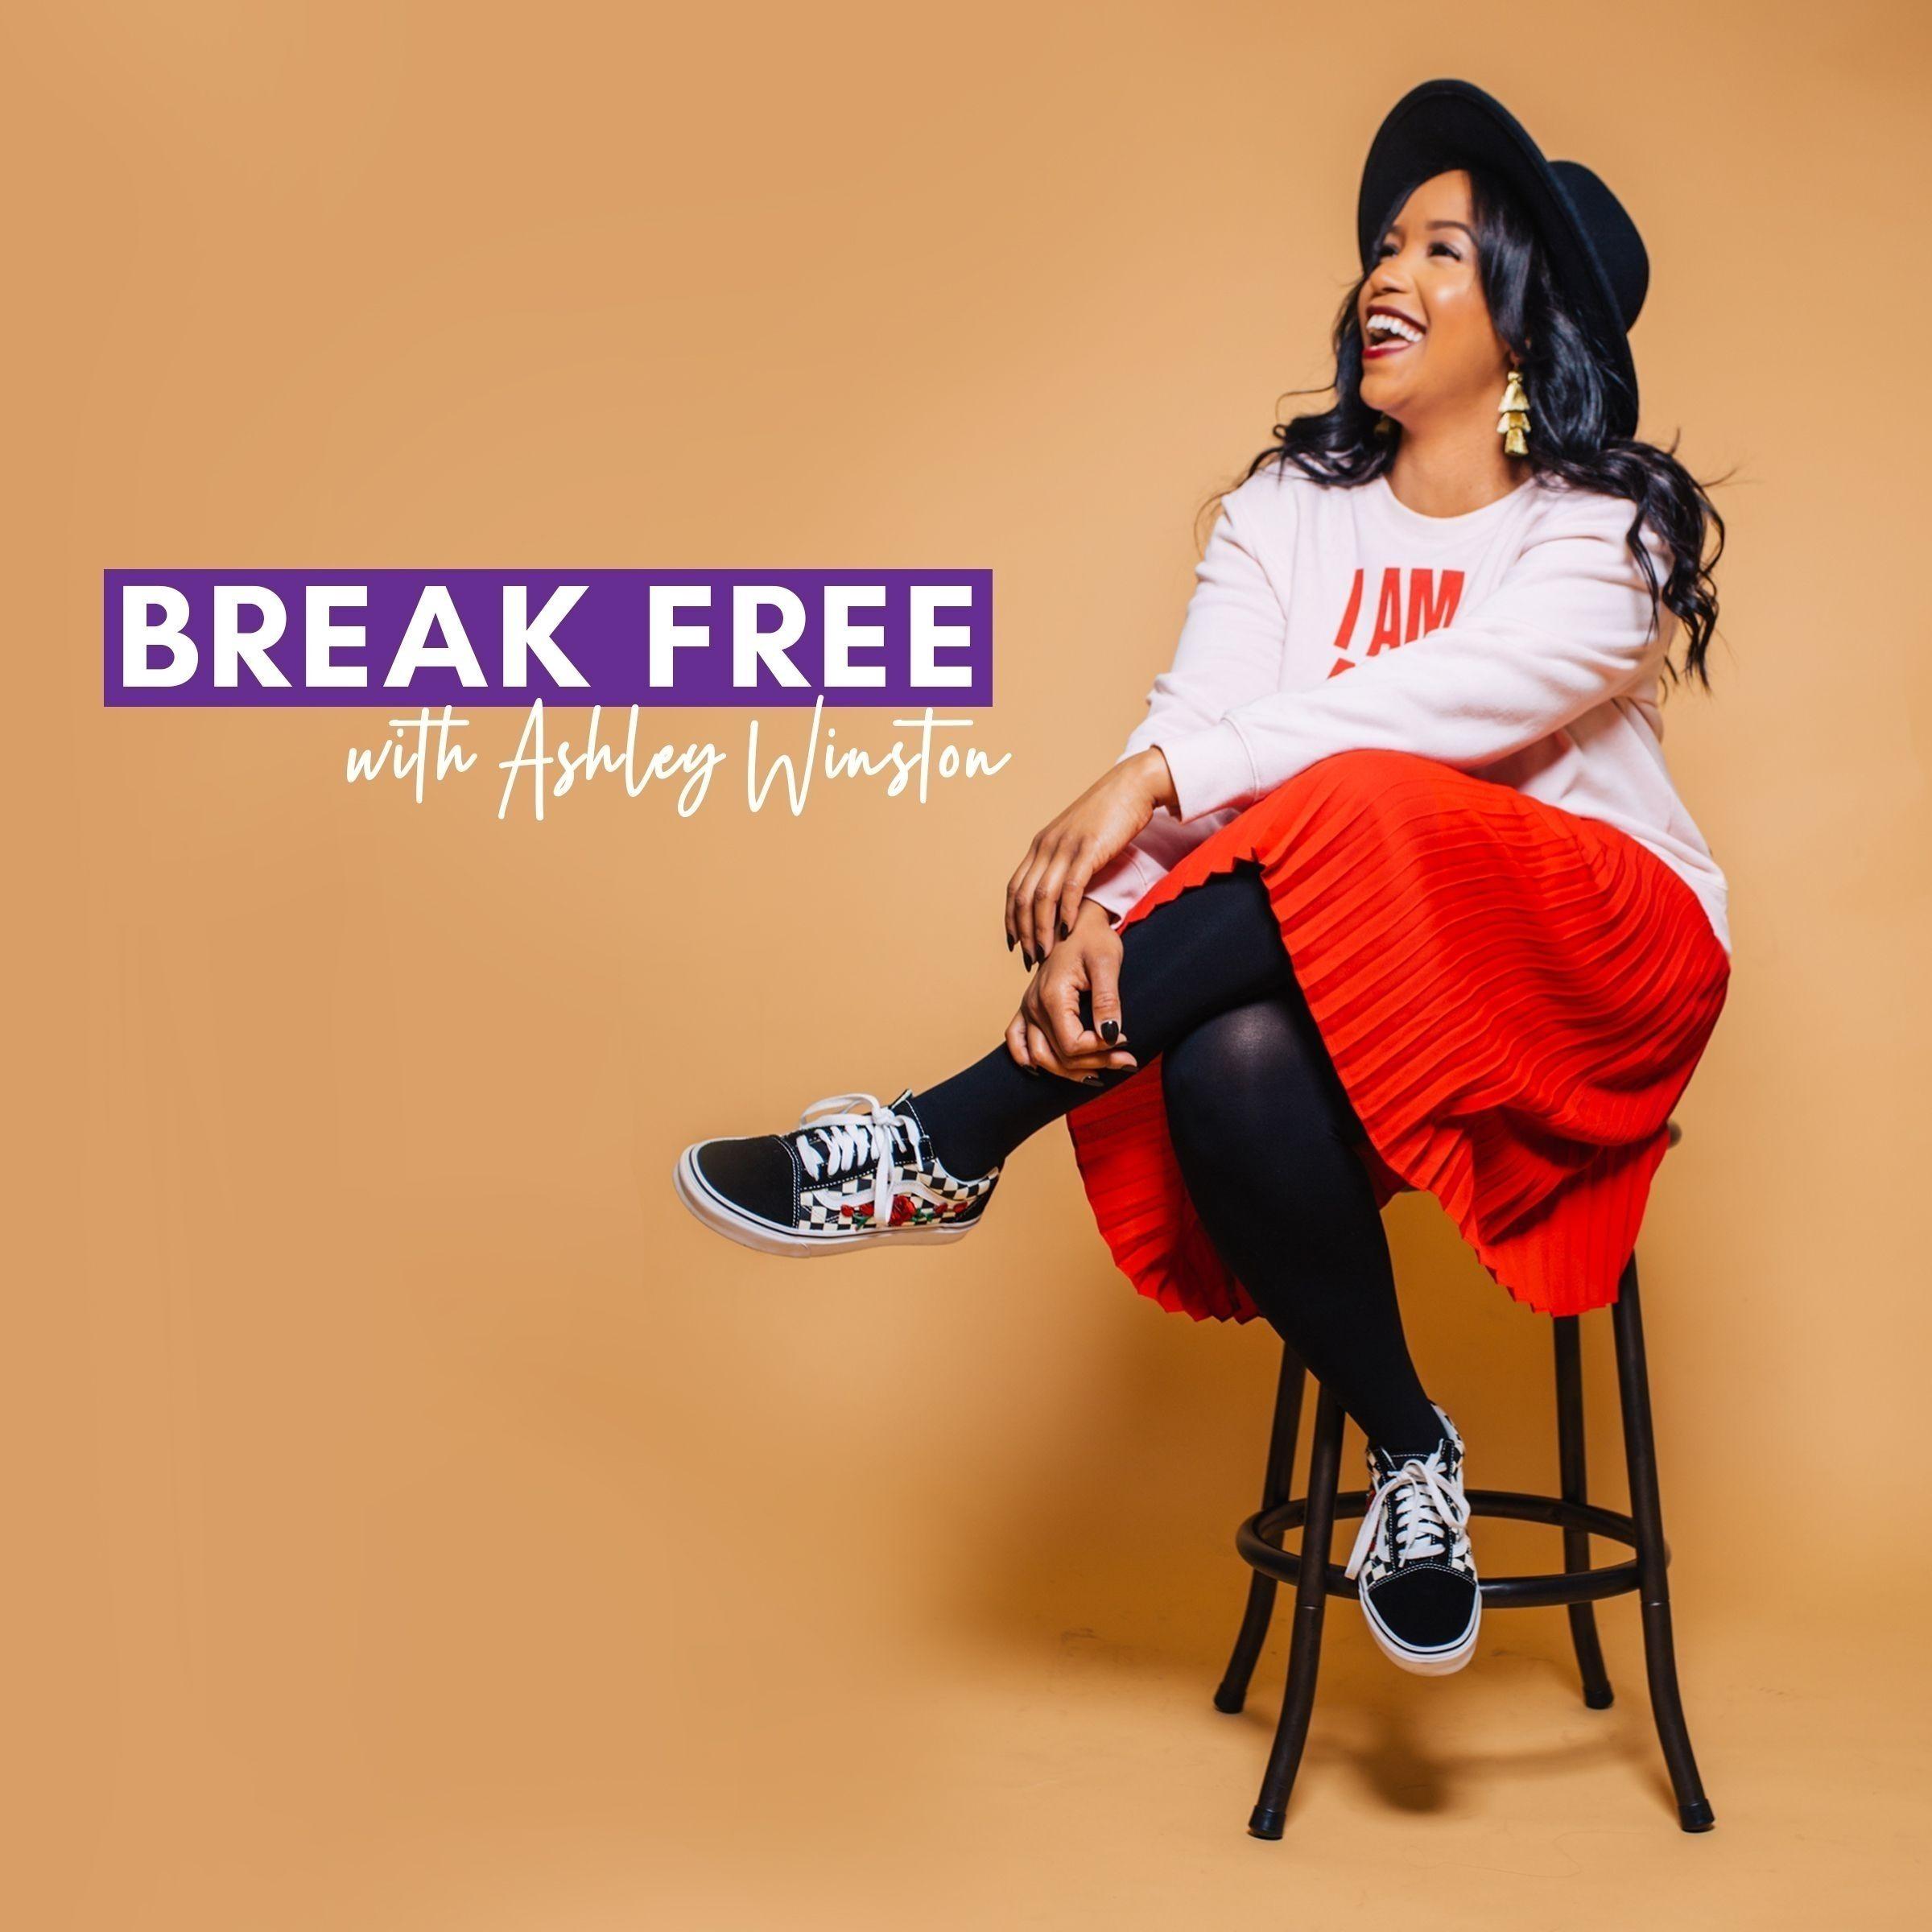 Break Free with Ashley Winston